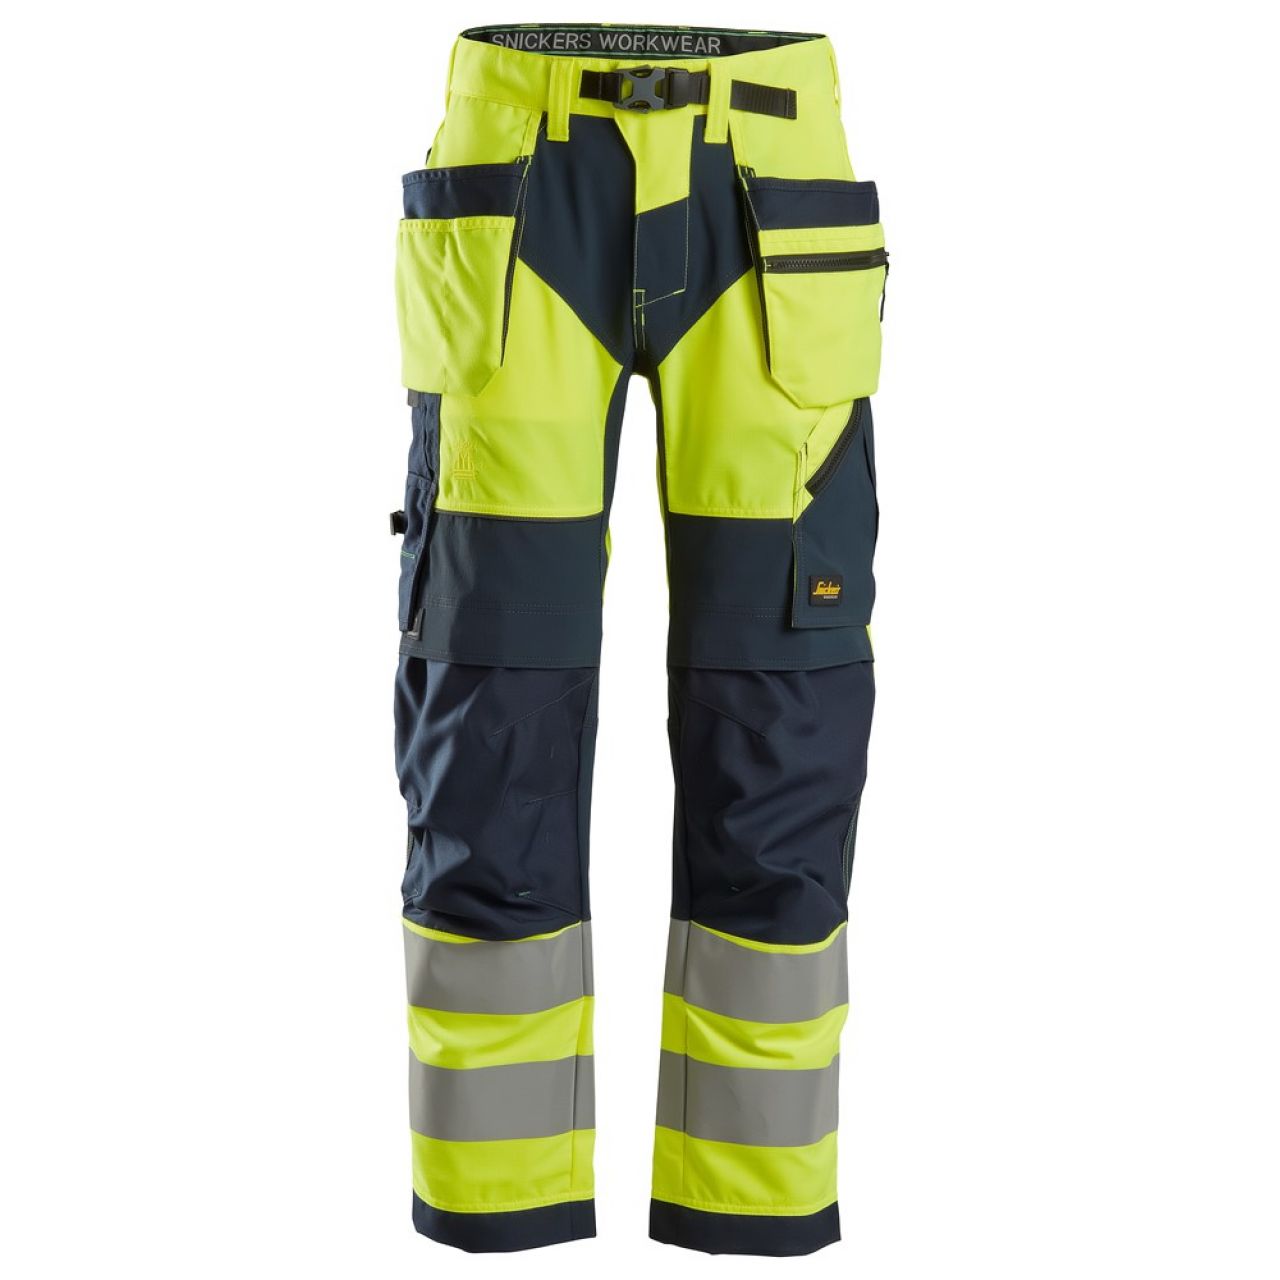 6932 Pantalones largos de trabajo de alta visibilidad clase 2 con bolsillos flotantes FlexiWork amarillo-azul marino talla 256